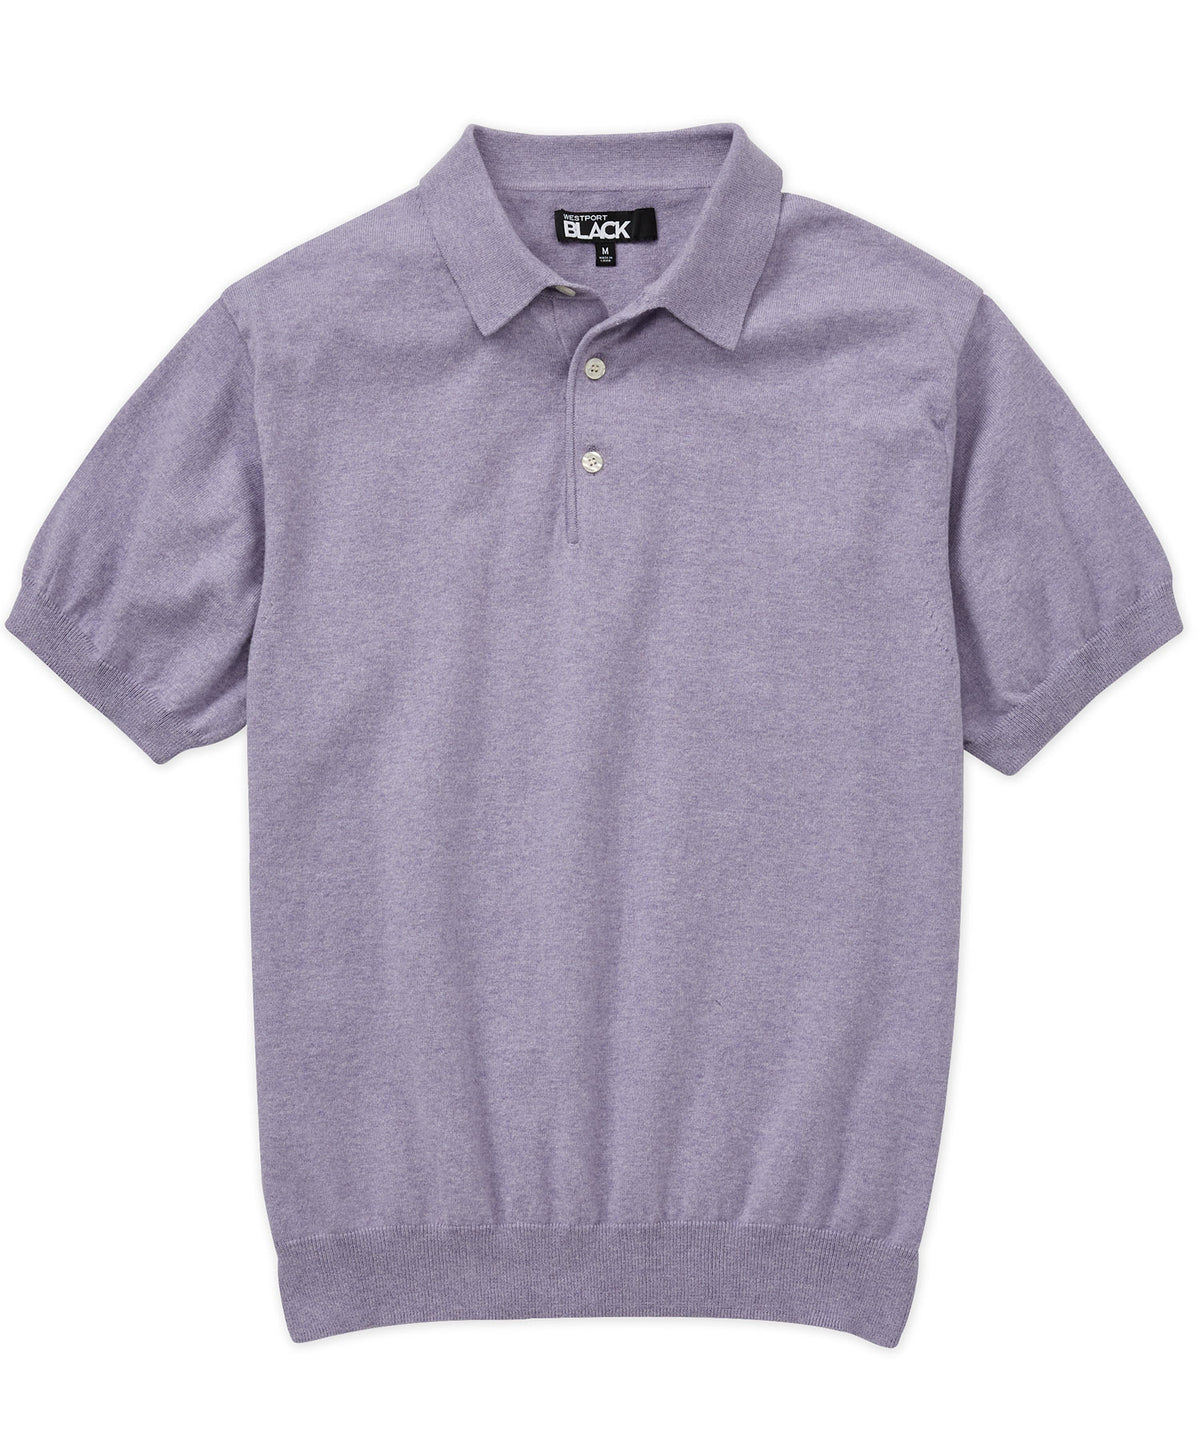 Westport Black Short Sleeve Cotton Cashmere Polo Knit Shirt, Big & Tall